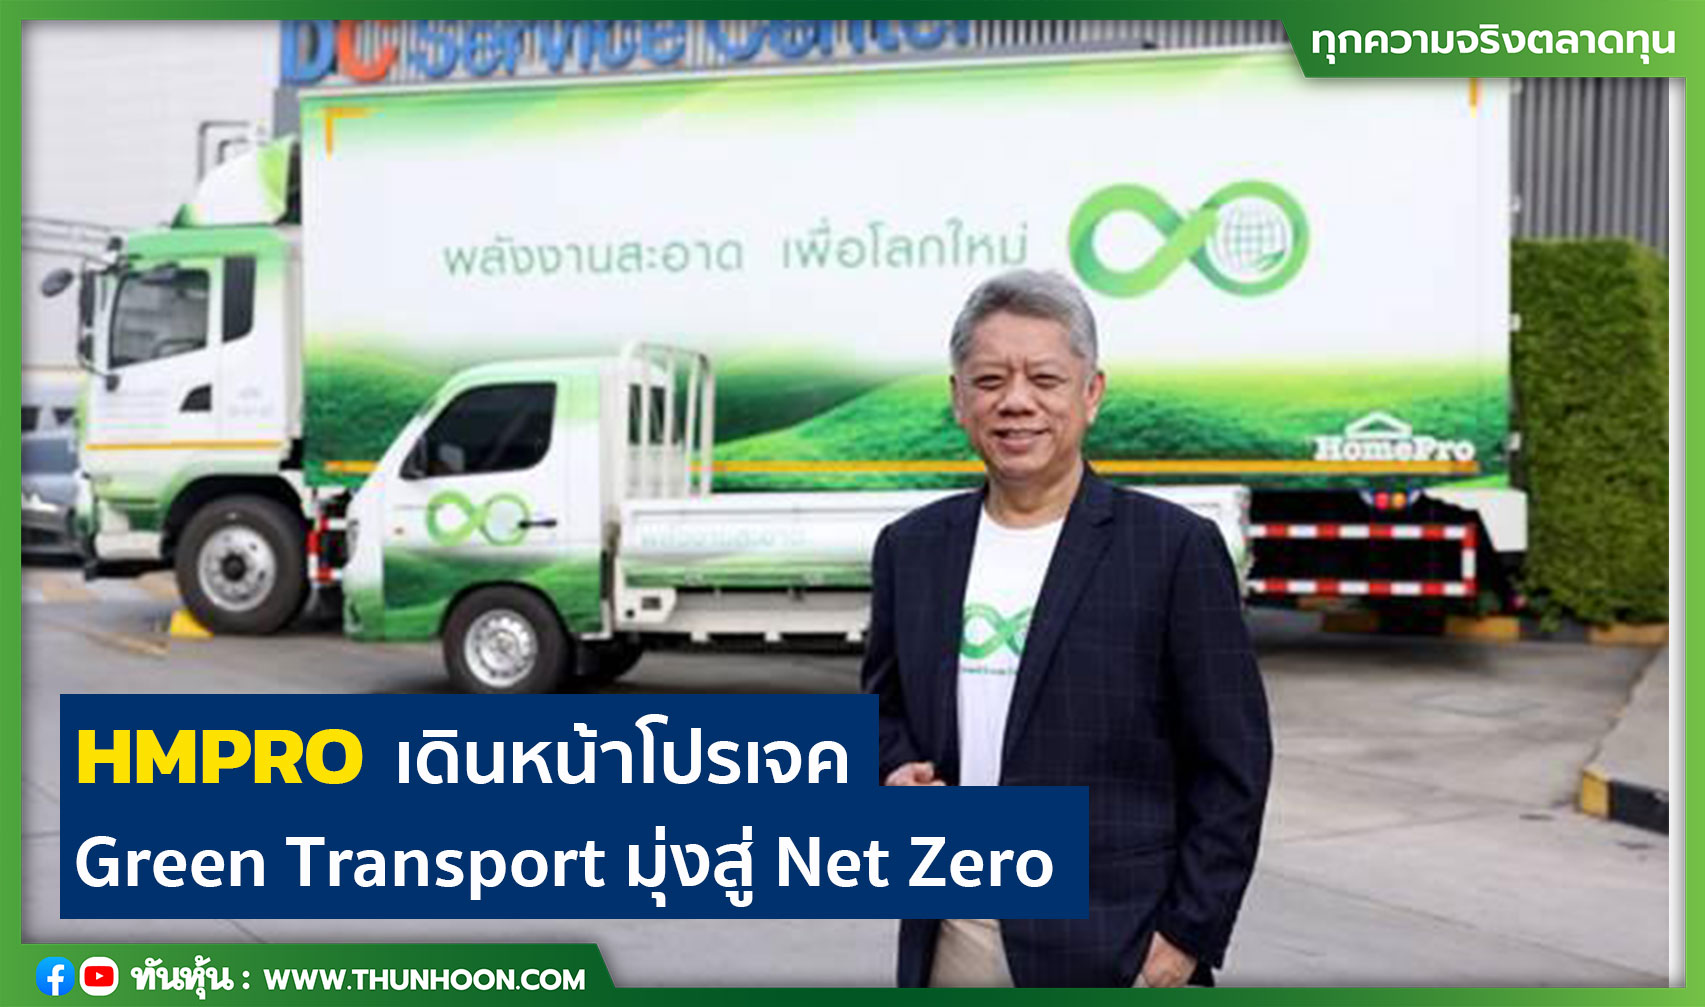 HMPRO เดินหน้าโปรเจค Green Transport มุ่งสู่ Net Zero